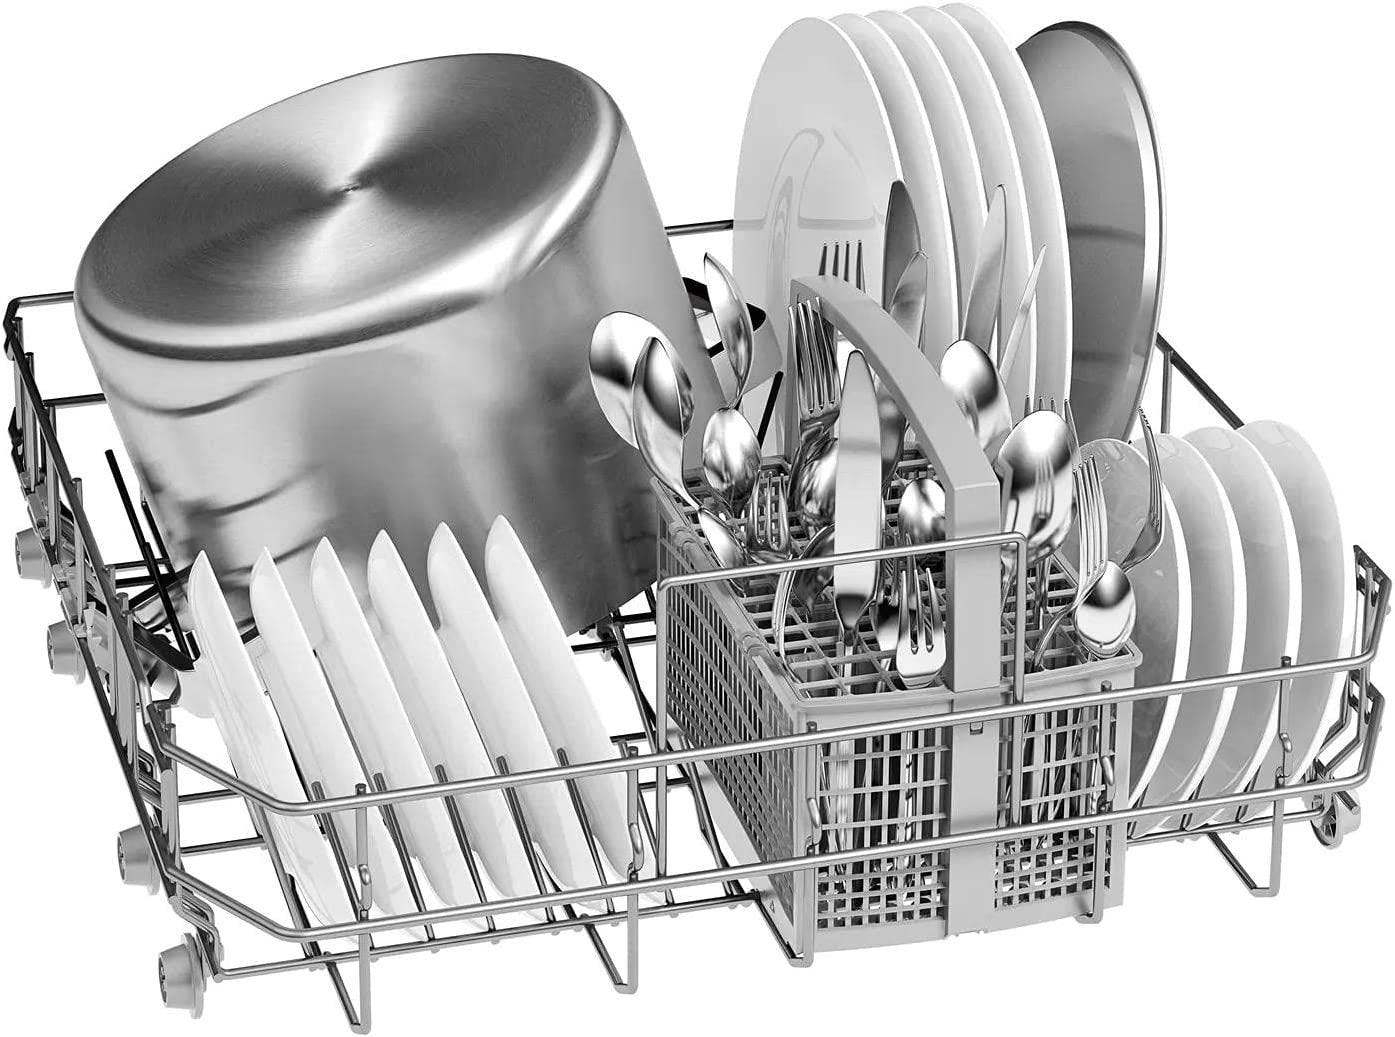 Bosch Series 4 Digital Dishwasher, 13 Place Settings, 6 Programs, Inox - SMS4EMI60T